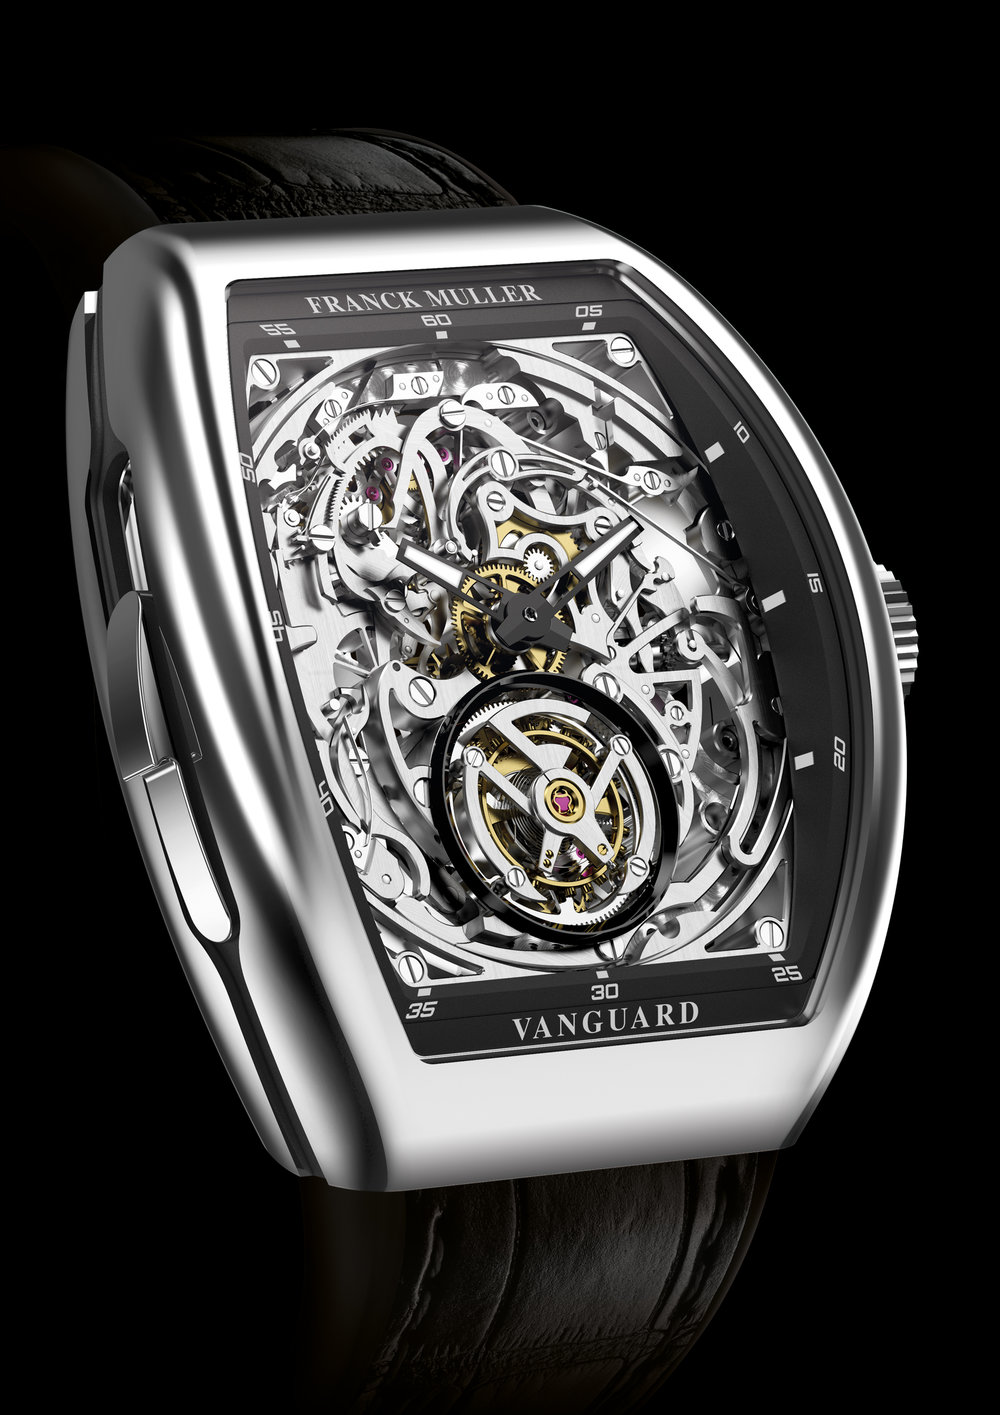 Franck Muller Franck Muller 5850MSCCOLDRMD1R Silver Dial New Watch Men's Watch